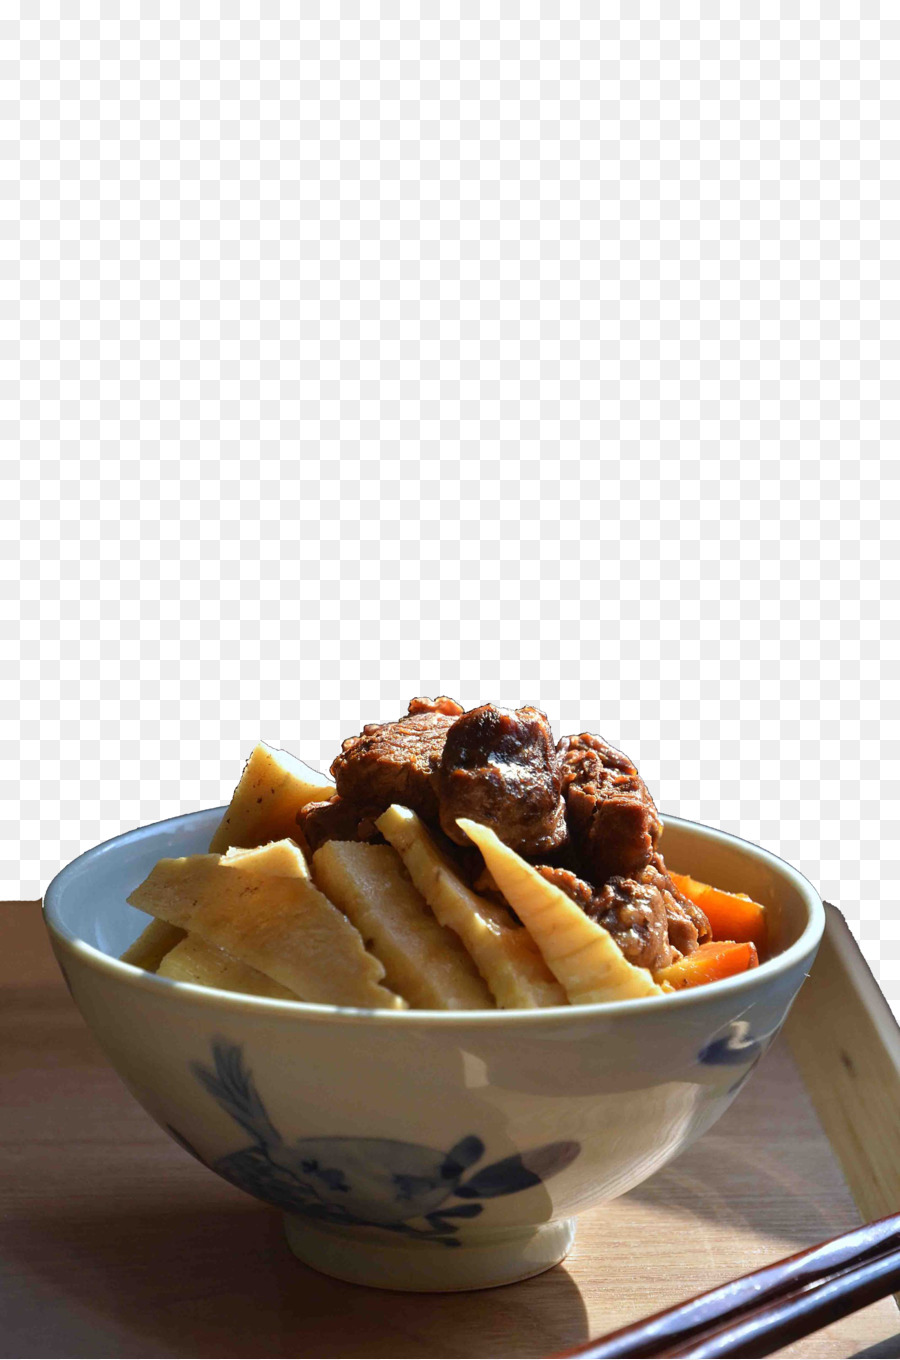 Asiatische Küche, Spare ribs Bamboo shoot Fleisch - Bambussprossen gekocht Schweinefleisch